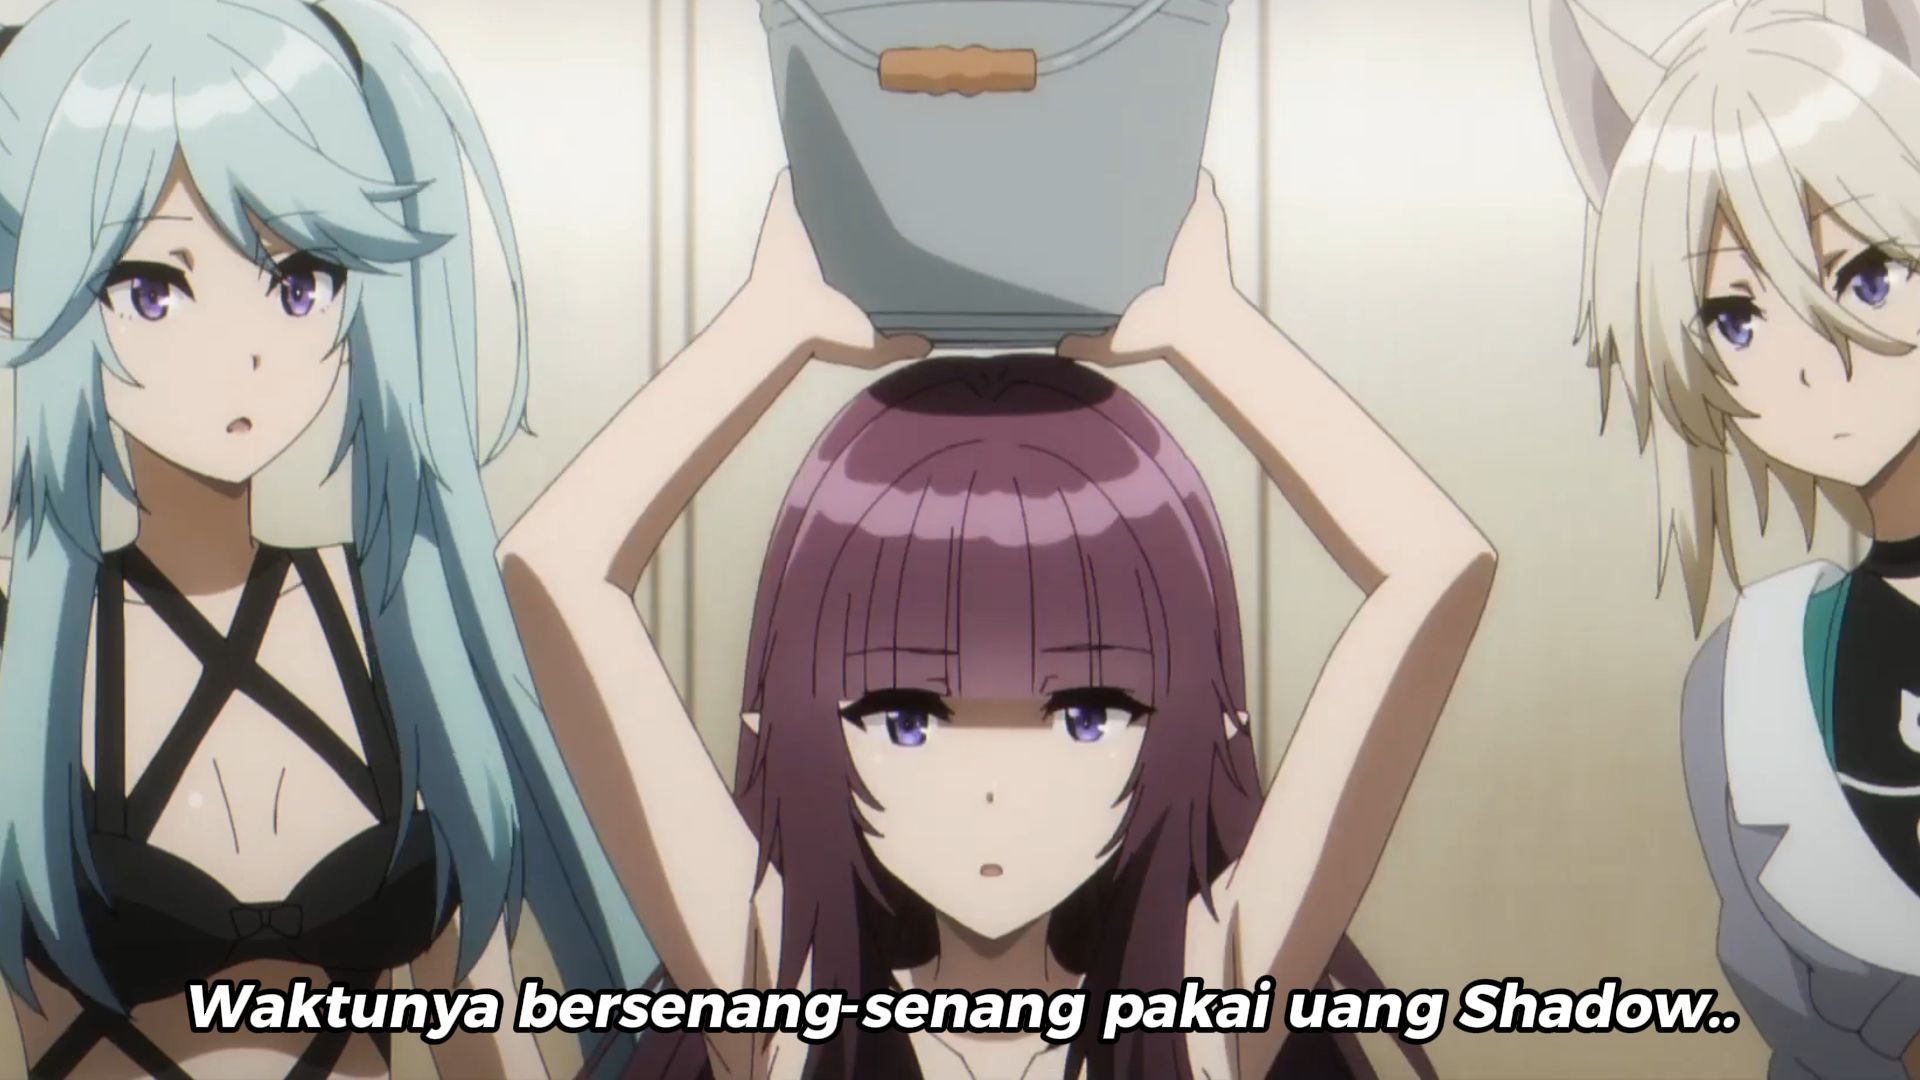 Kage no Jitsuryokusha ni Naritakute! Season 2 Episode 8 Subtitle Indonesia  - SOKUJA